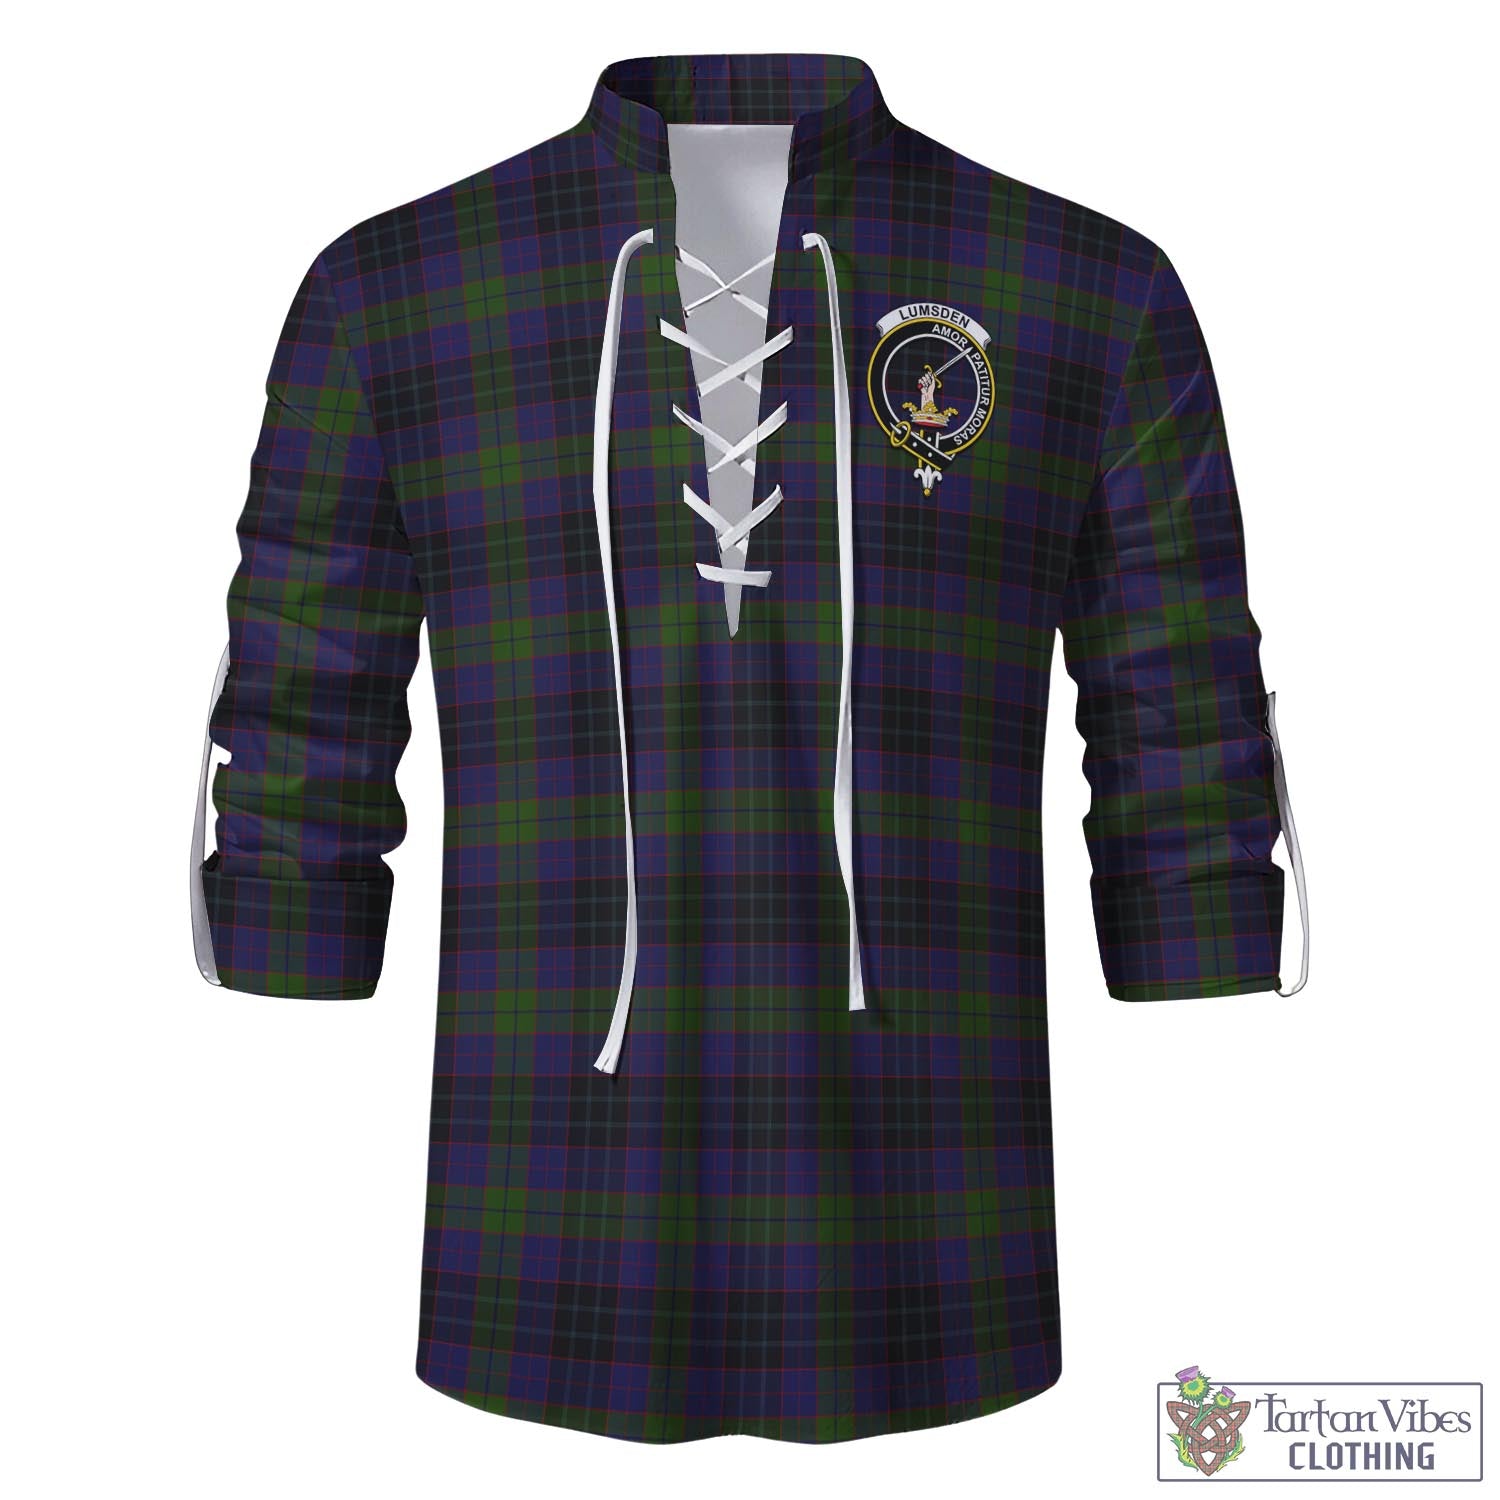 Tartan Vibes Clothing Lumsden Hunting Tartan Men's Scottish Traditional Jacobite Ghillie Kilt Shirt with Family Crest